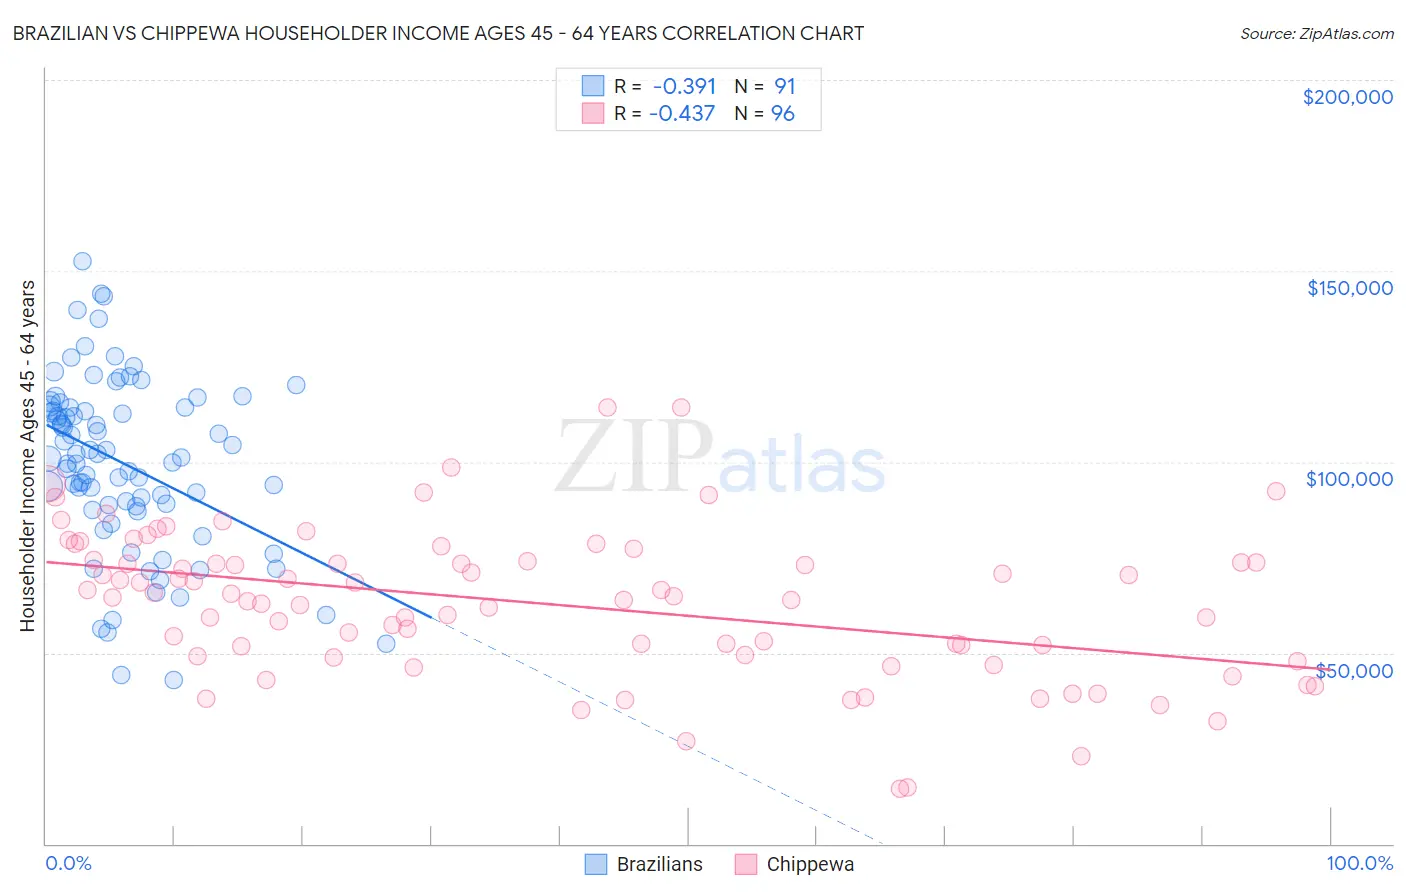 Brazilian vs Chippewa Householder Income Ages 45 - 64 years